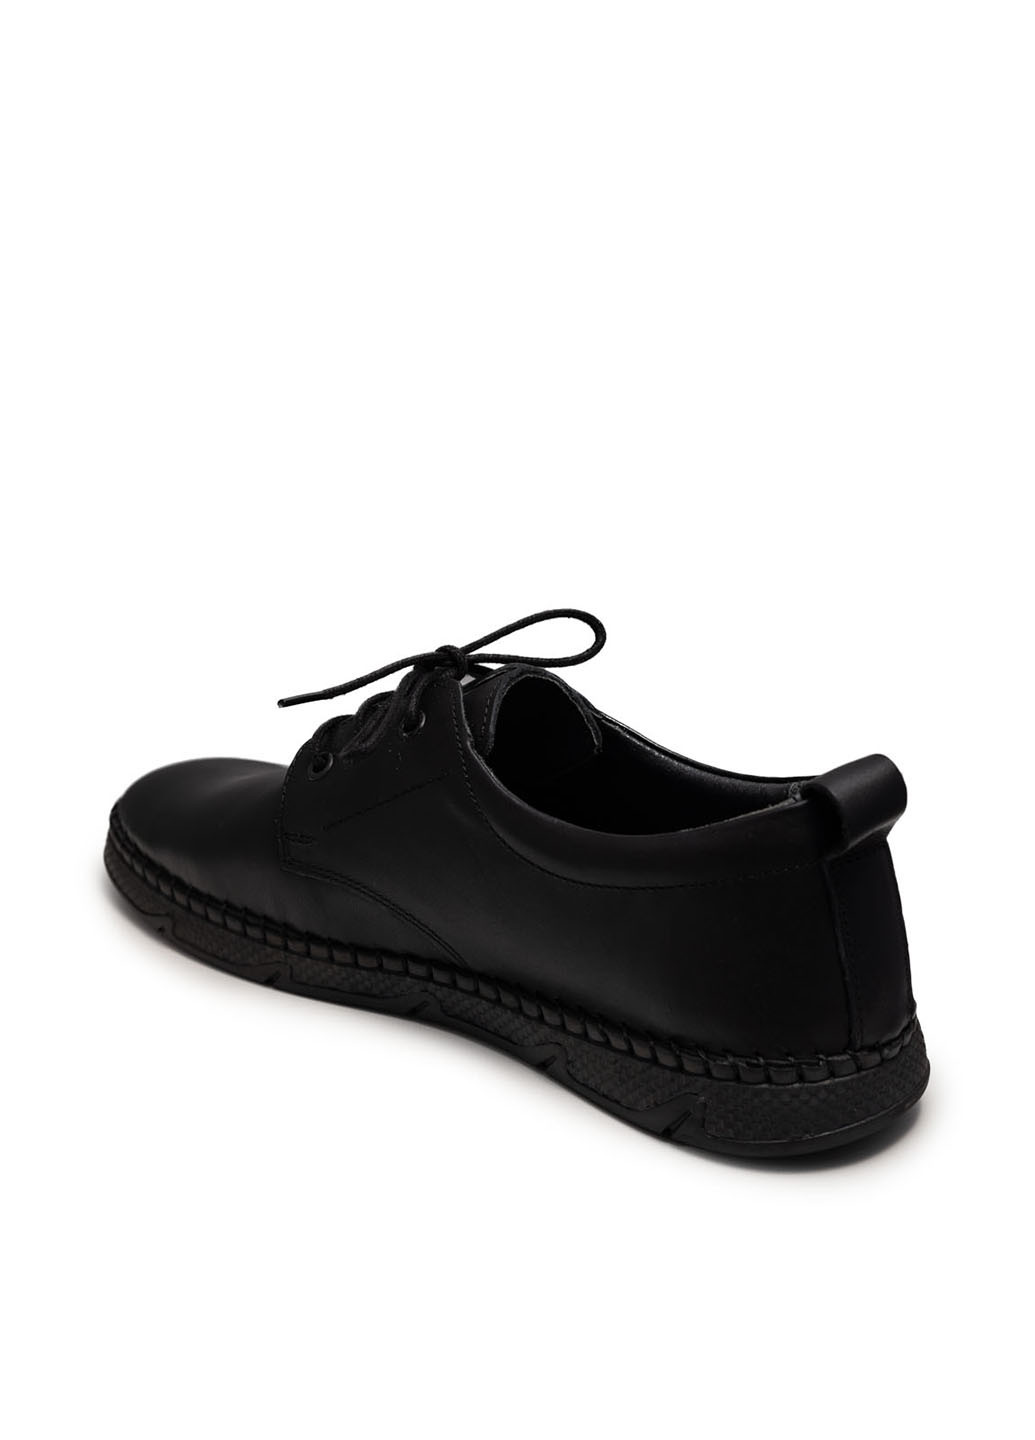 Черные кэжуал туфли Arsello на шнурках